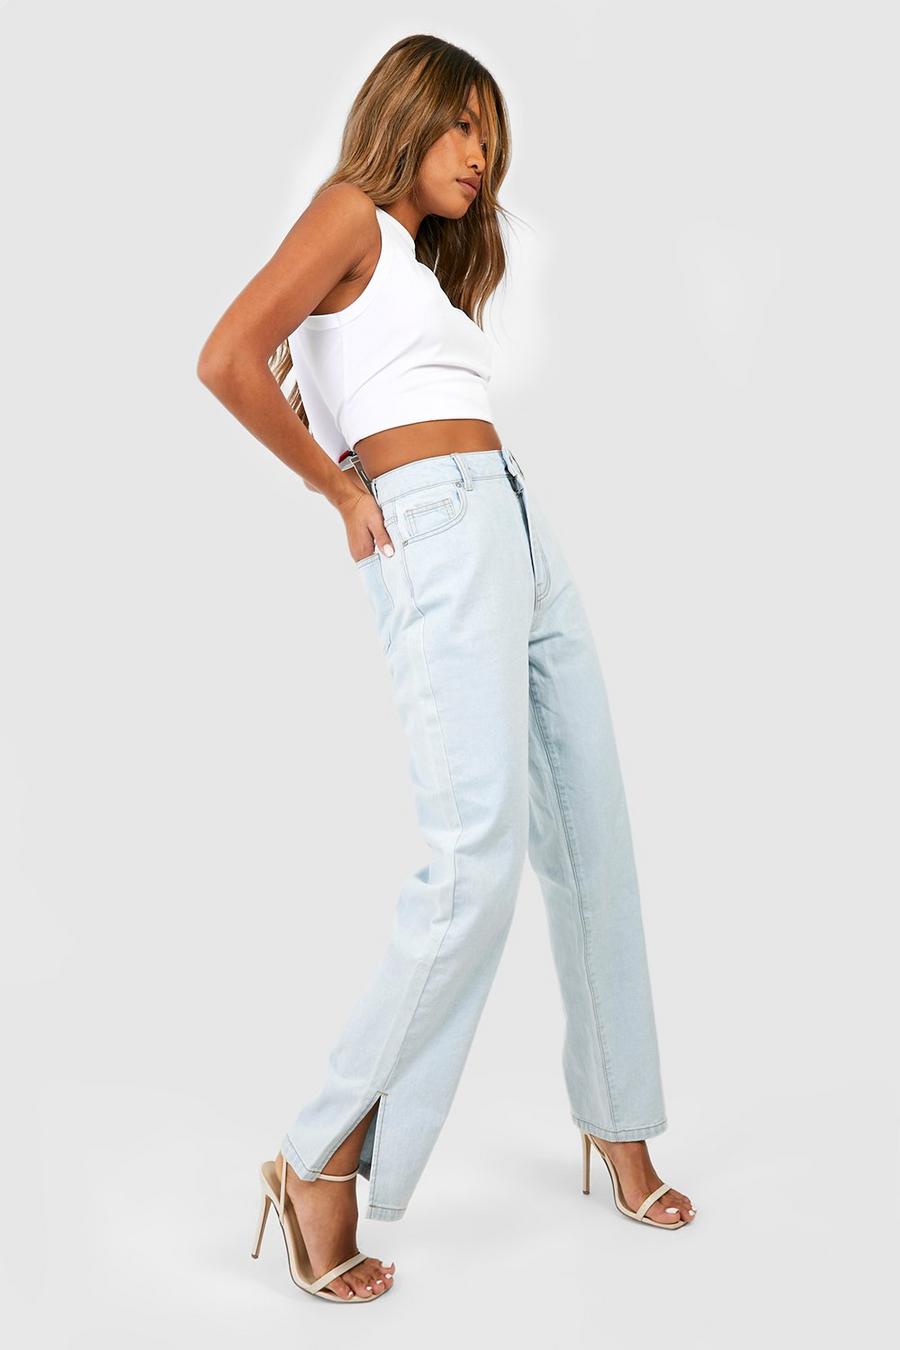 ECUPPER Women's Butt Lift Jeans Skinny Stretch Pants High Rise